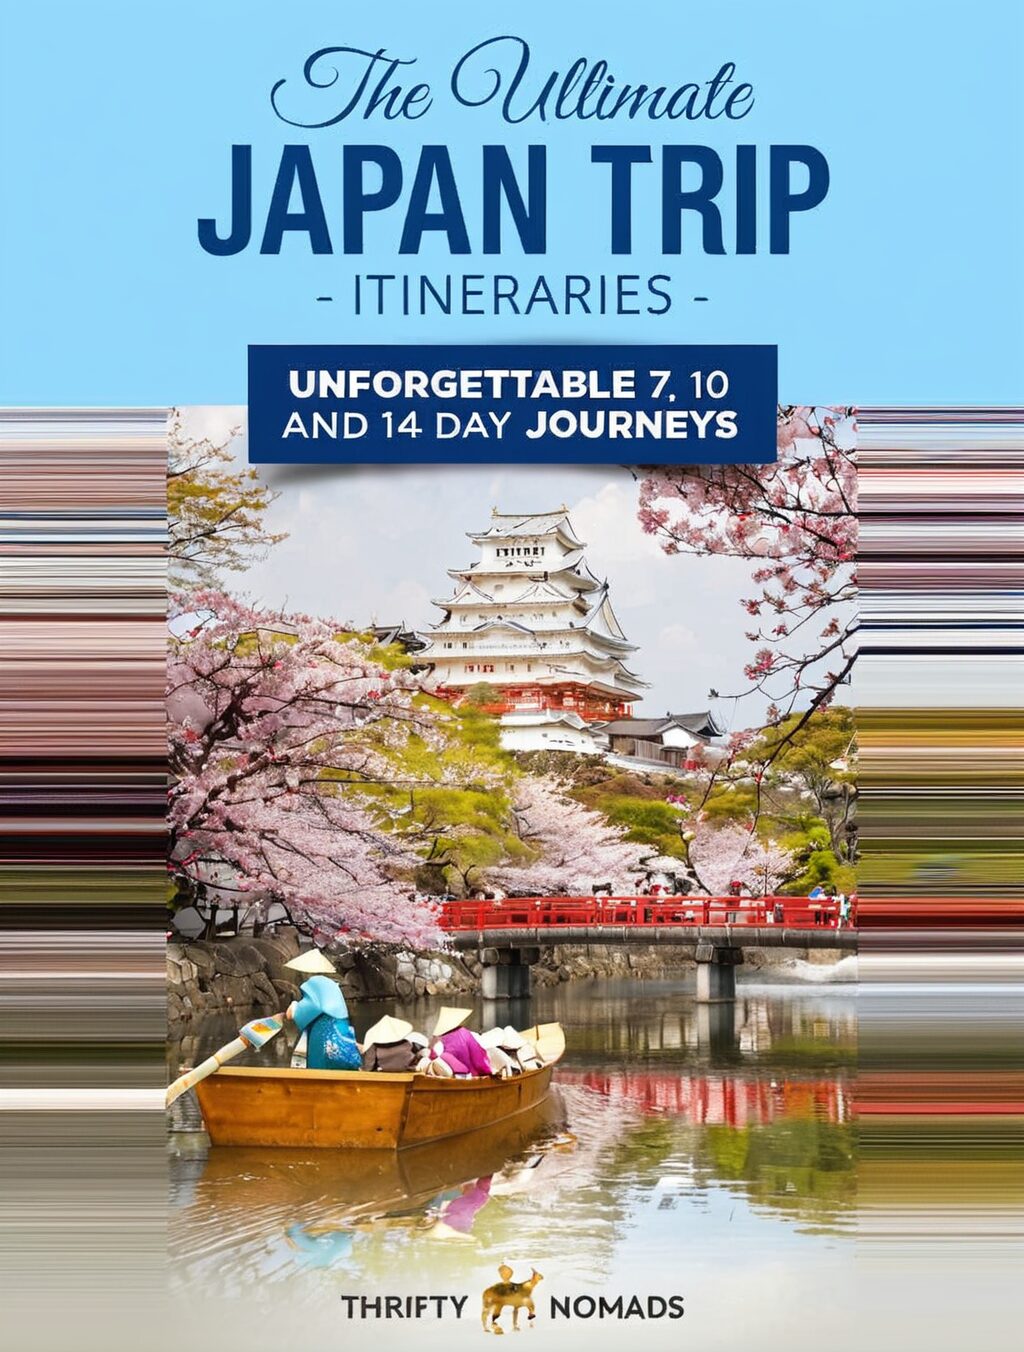 travel agent to plan japan trip